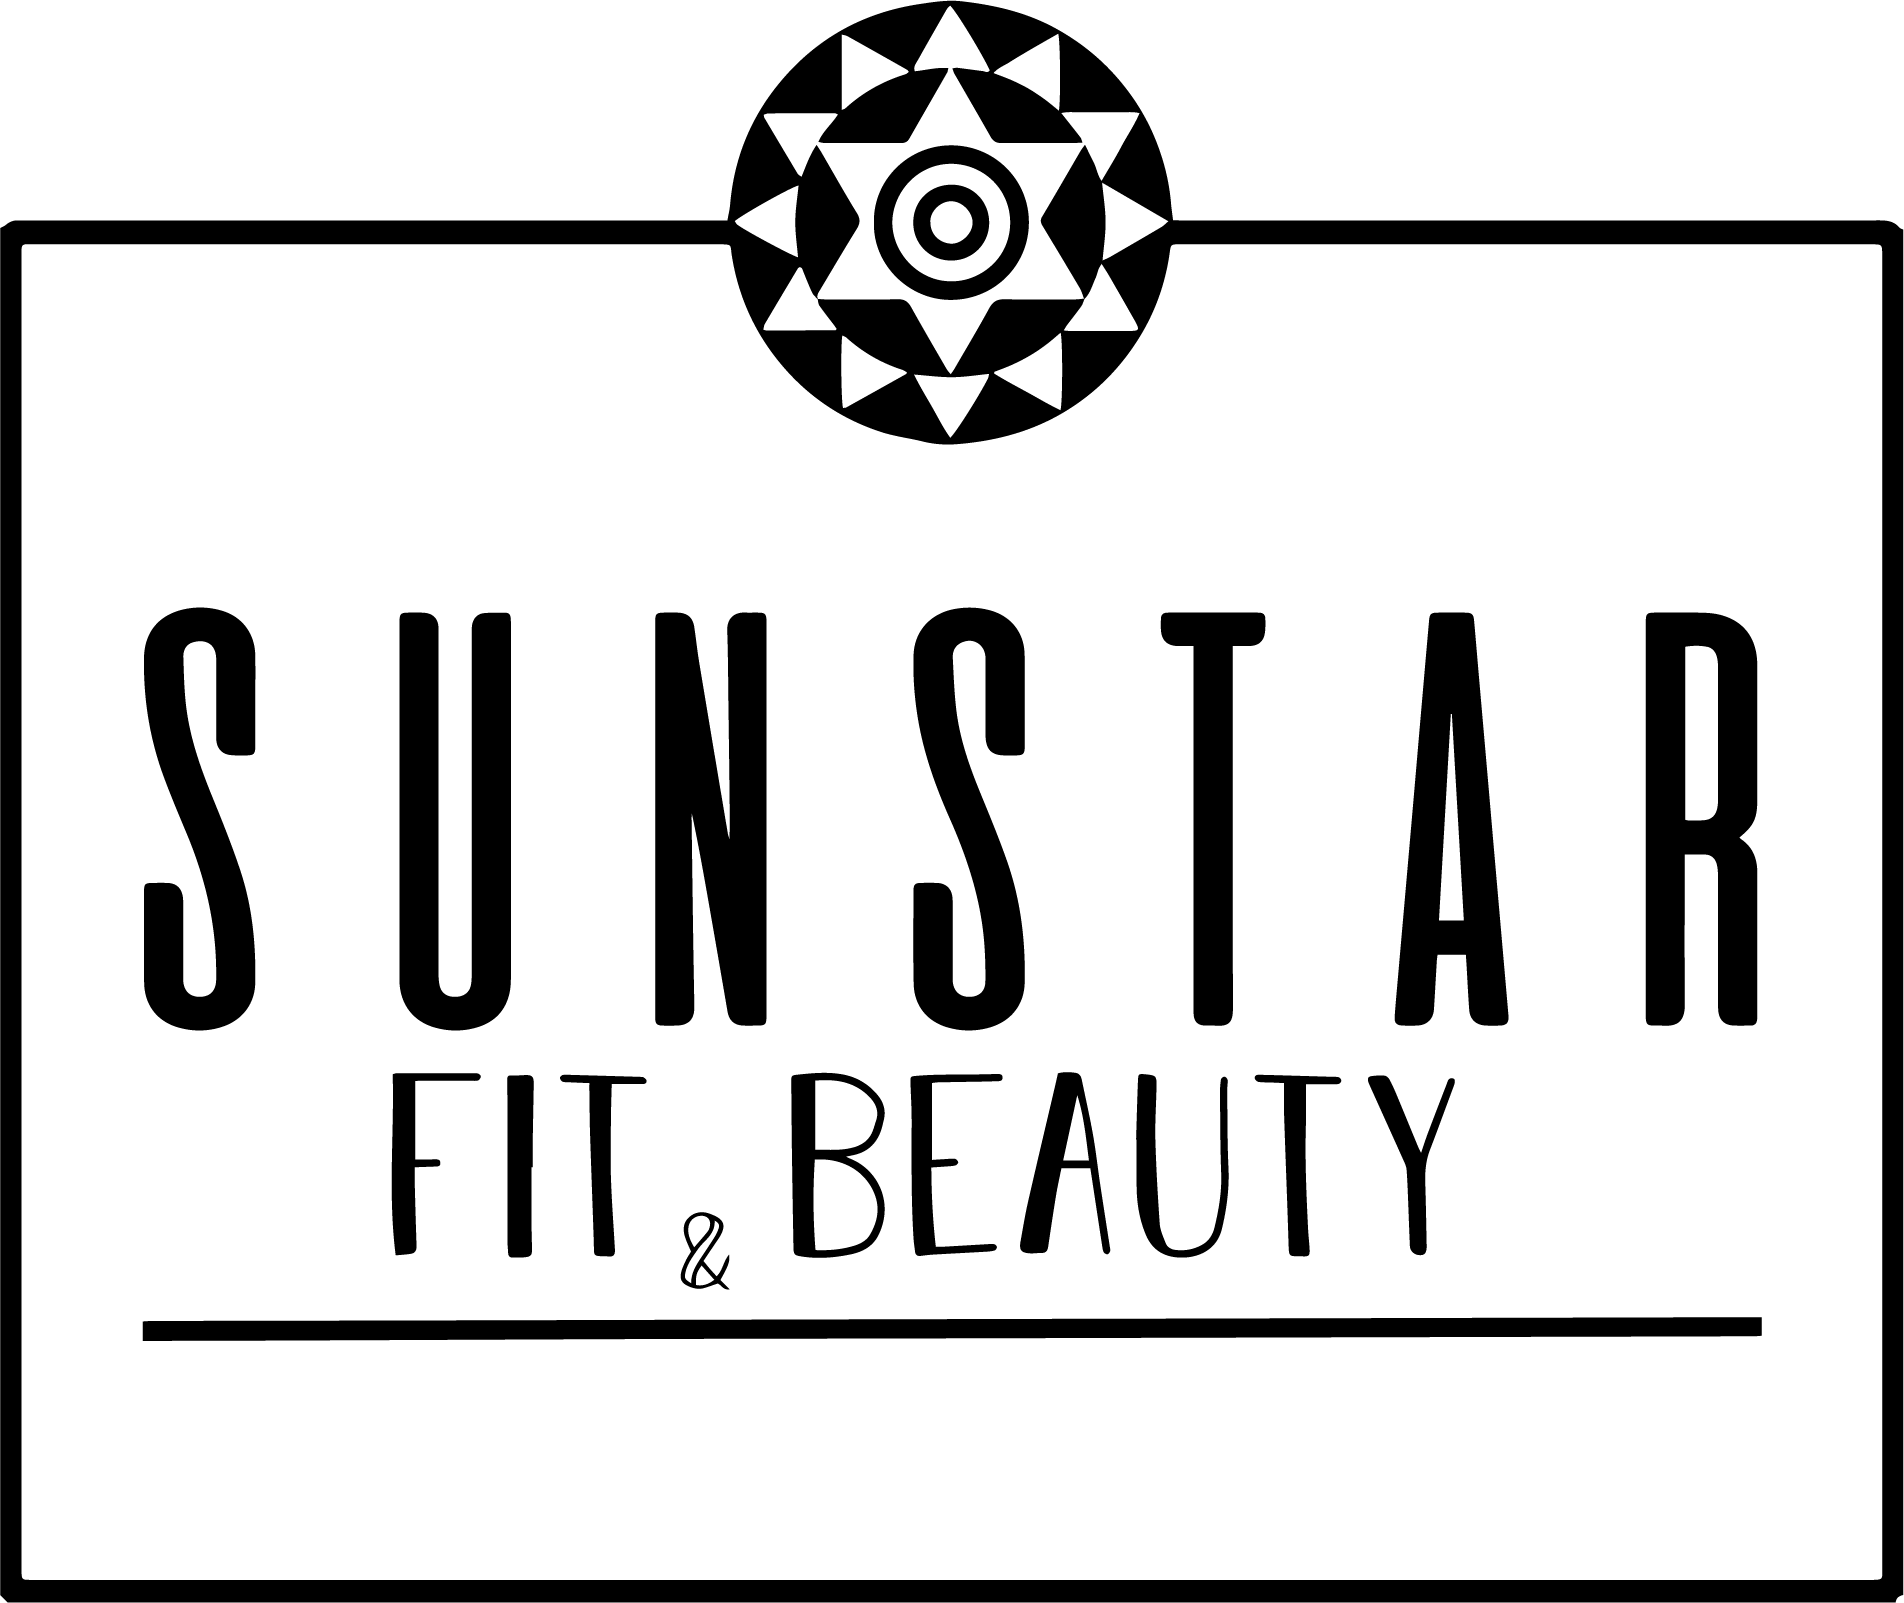 Fit & Beauty Center Sunstar